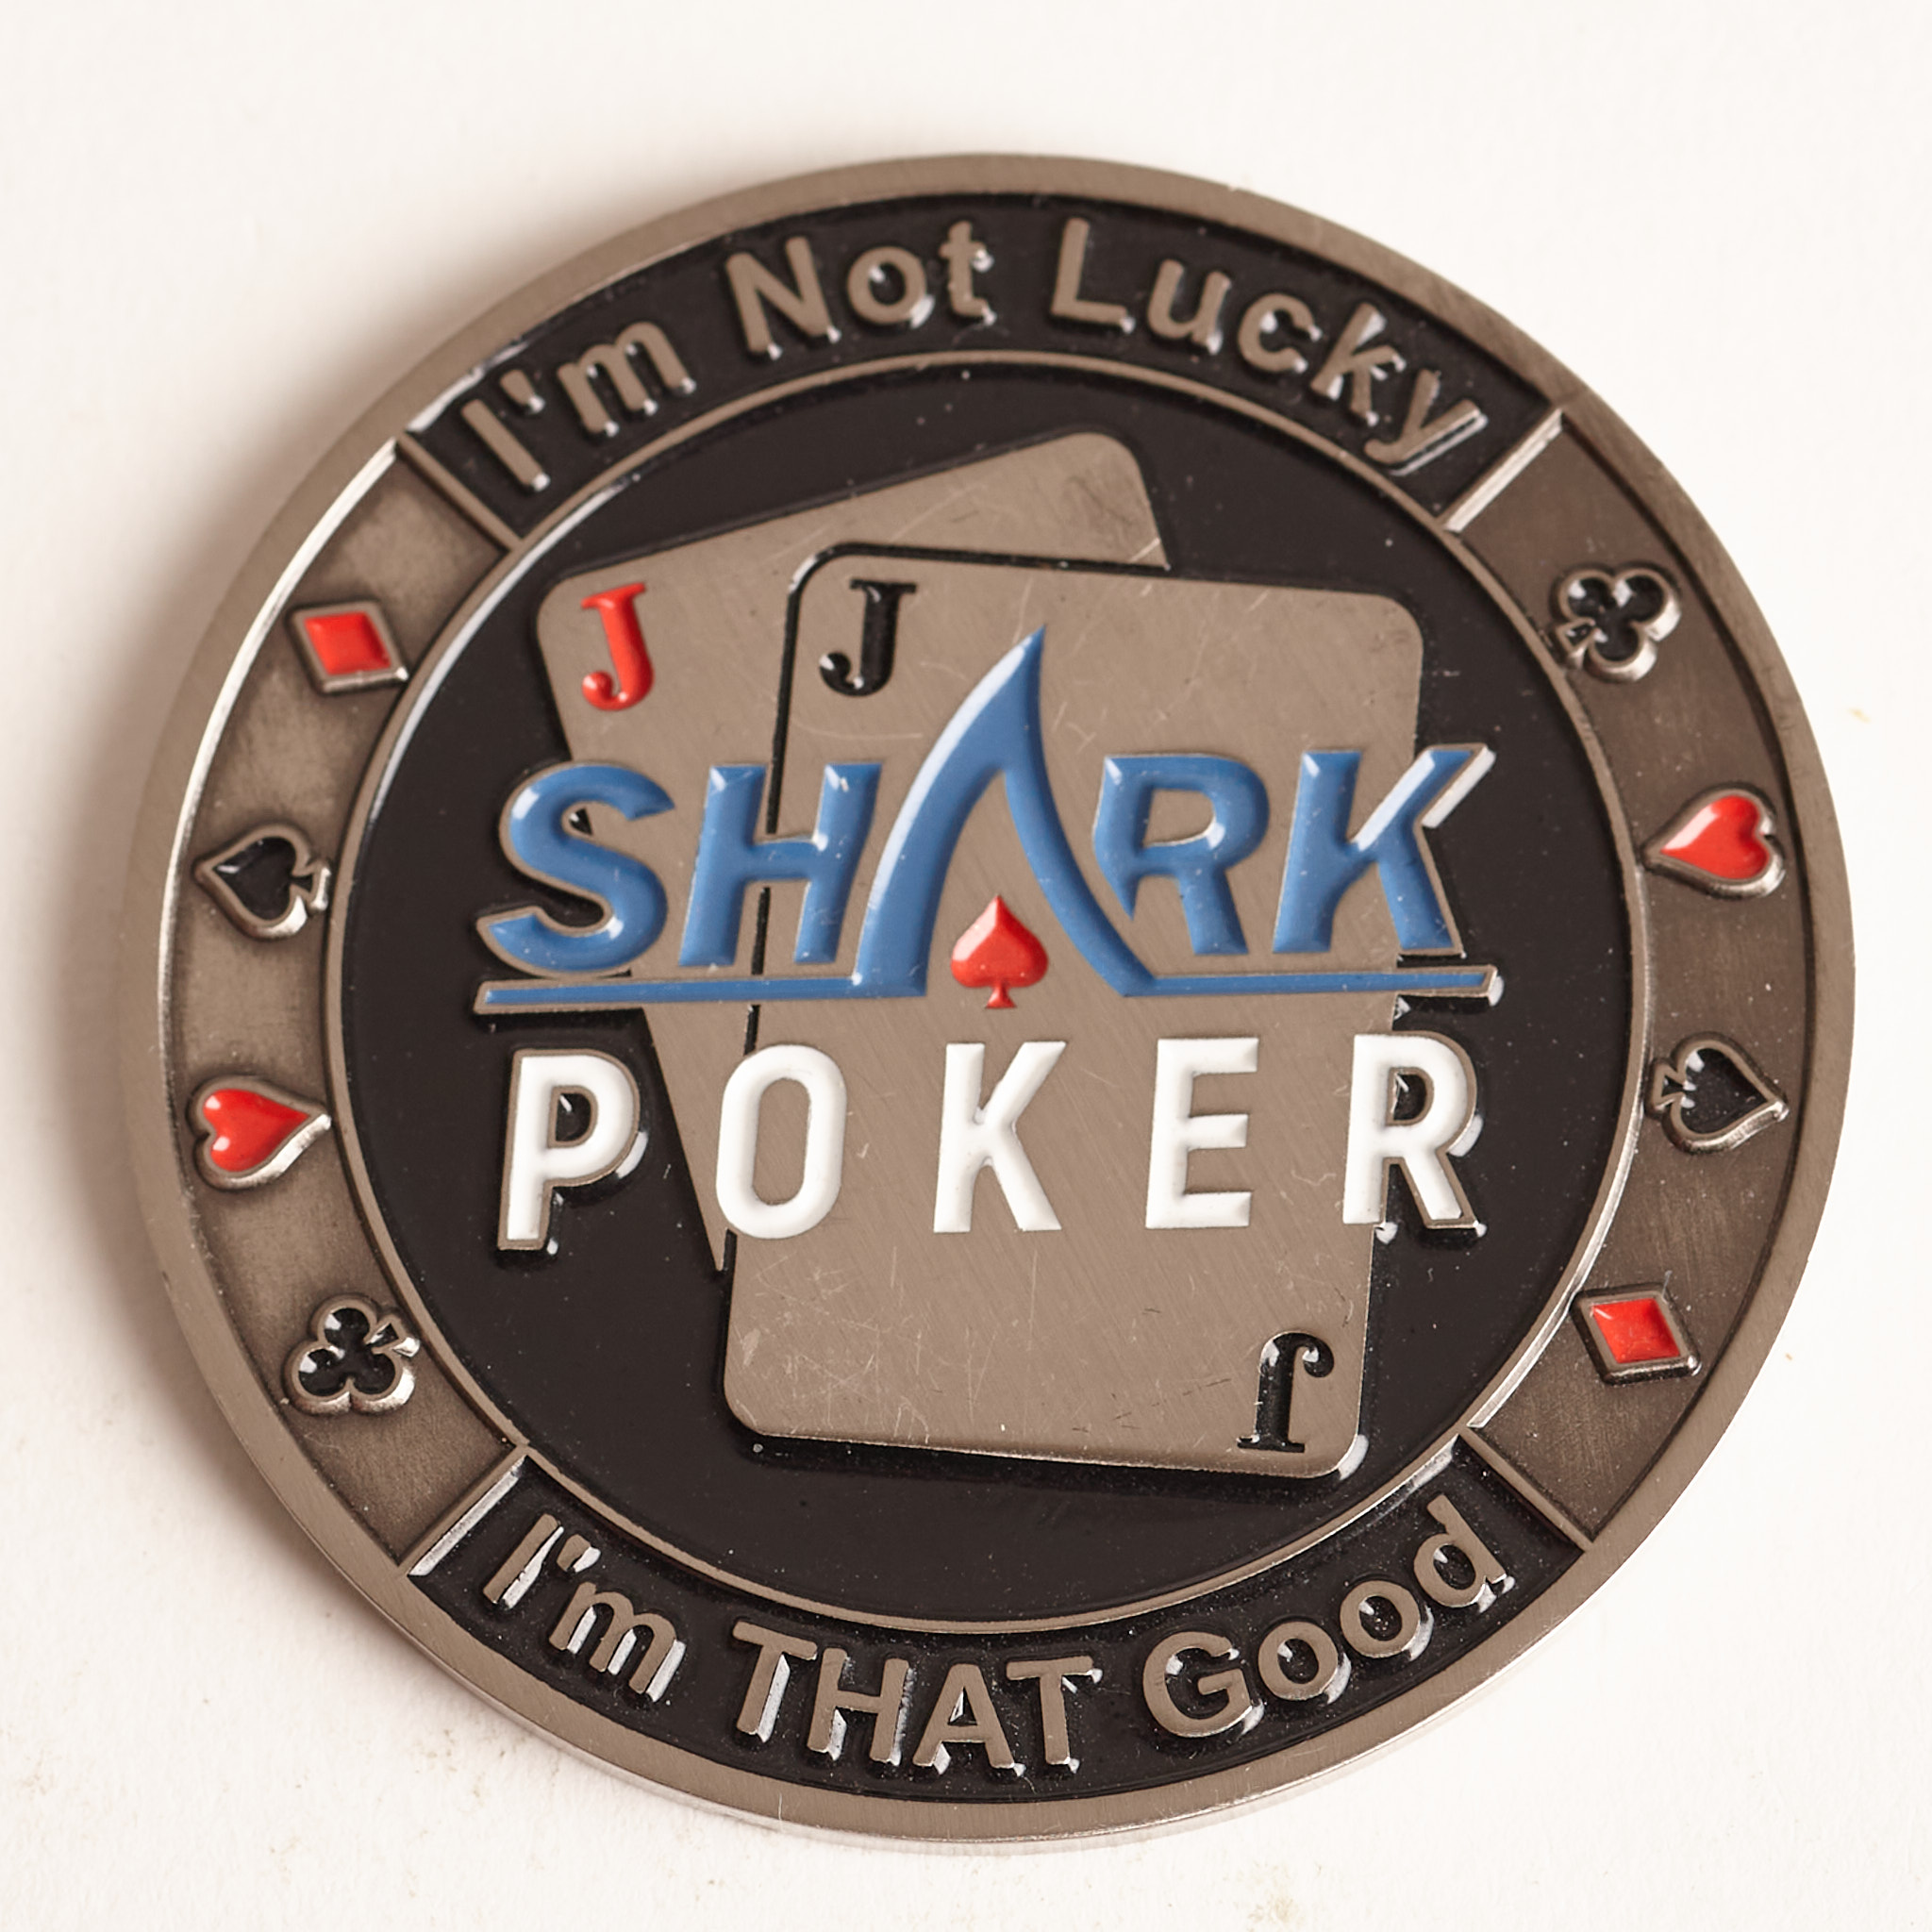 SHARK POKER, I’M NOT LUCKY, I’M THAT GOOD, Poker Card Guard